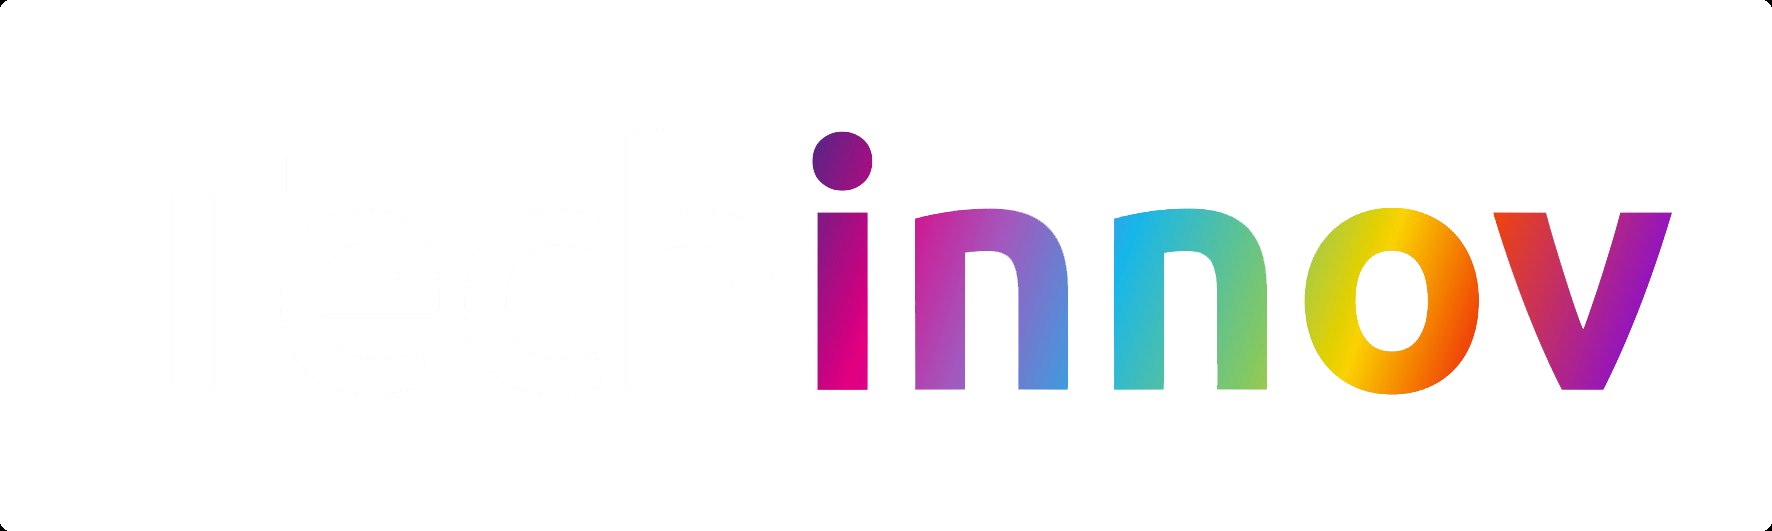 logo techinov